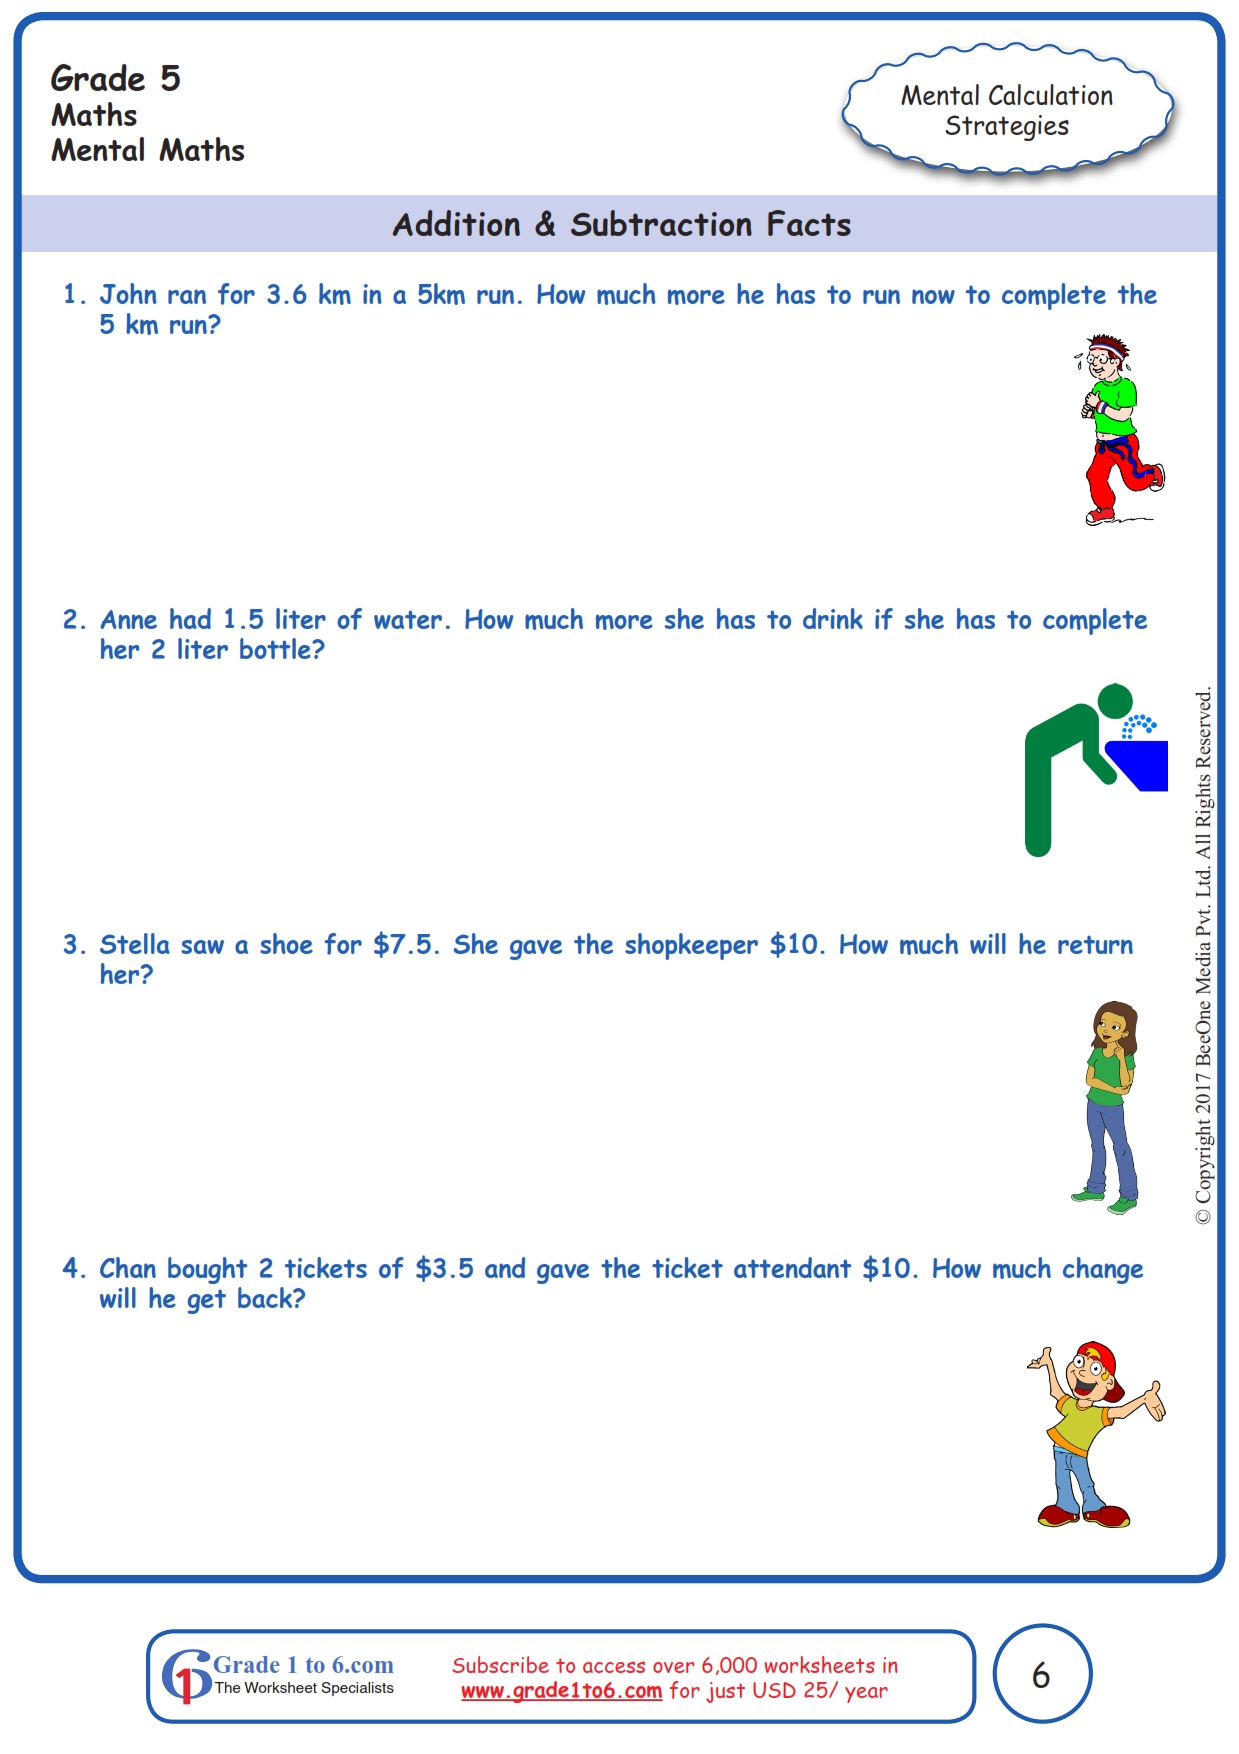 Grade 5 Mental Math Addition Worksheets|www.grade1to6.com